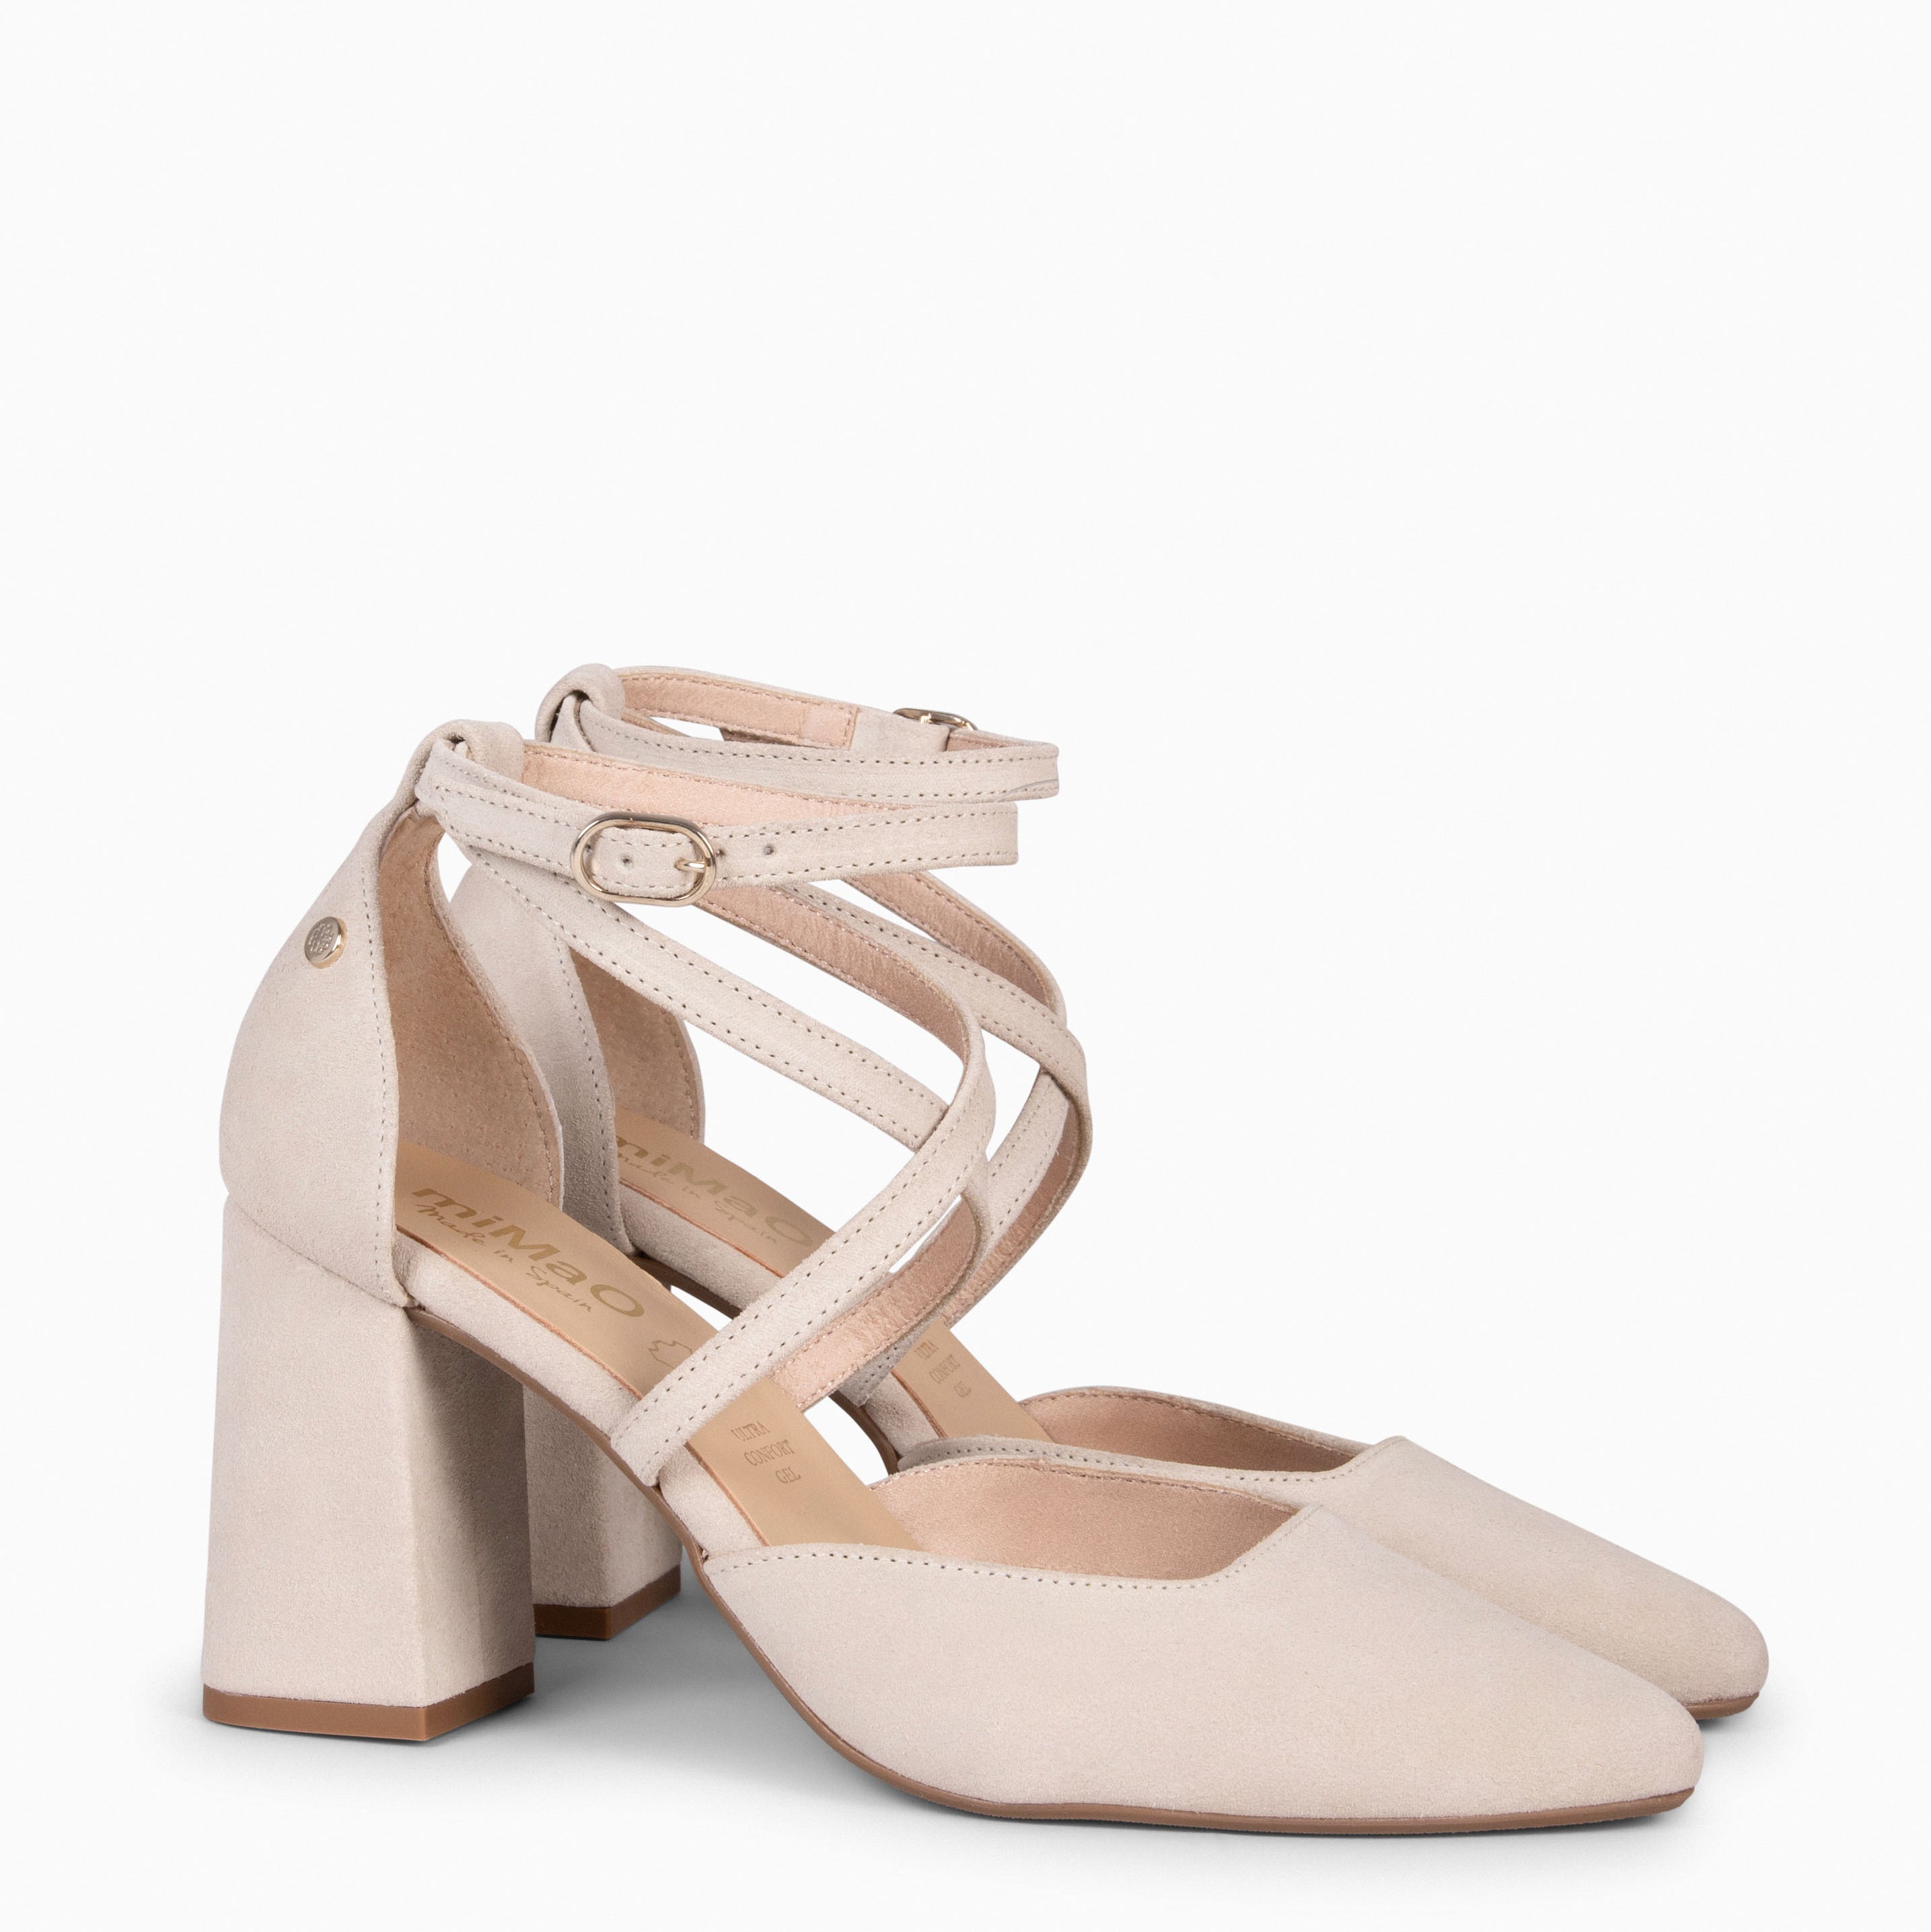 ARIEL – BEIGE Wide heel shoe